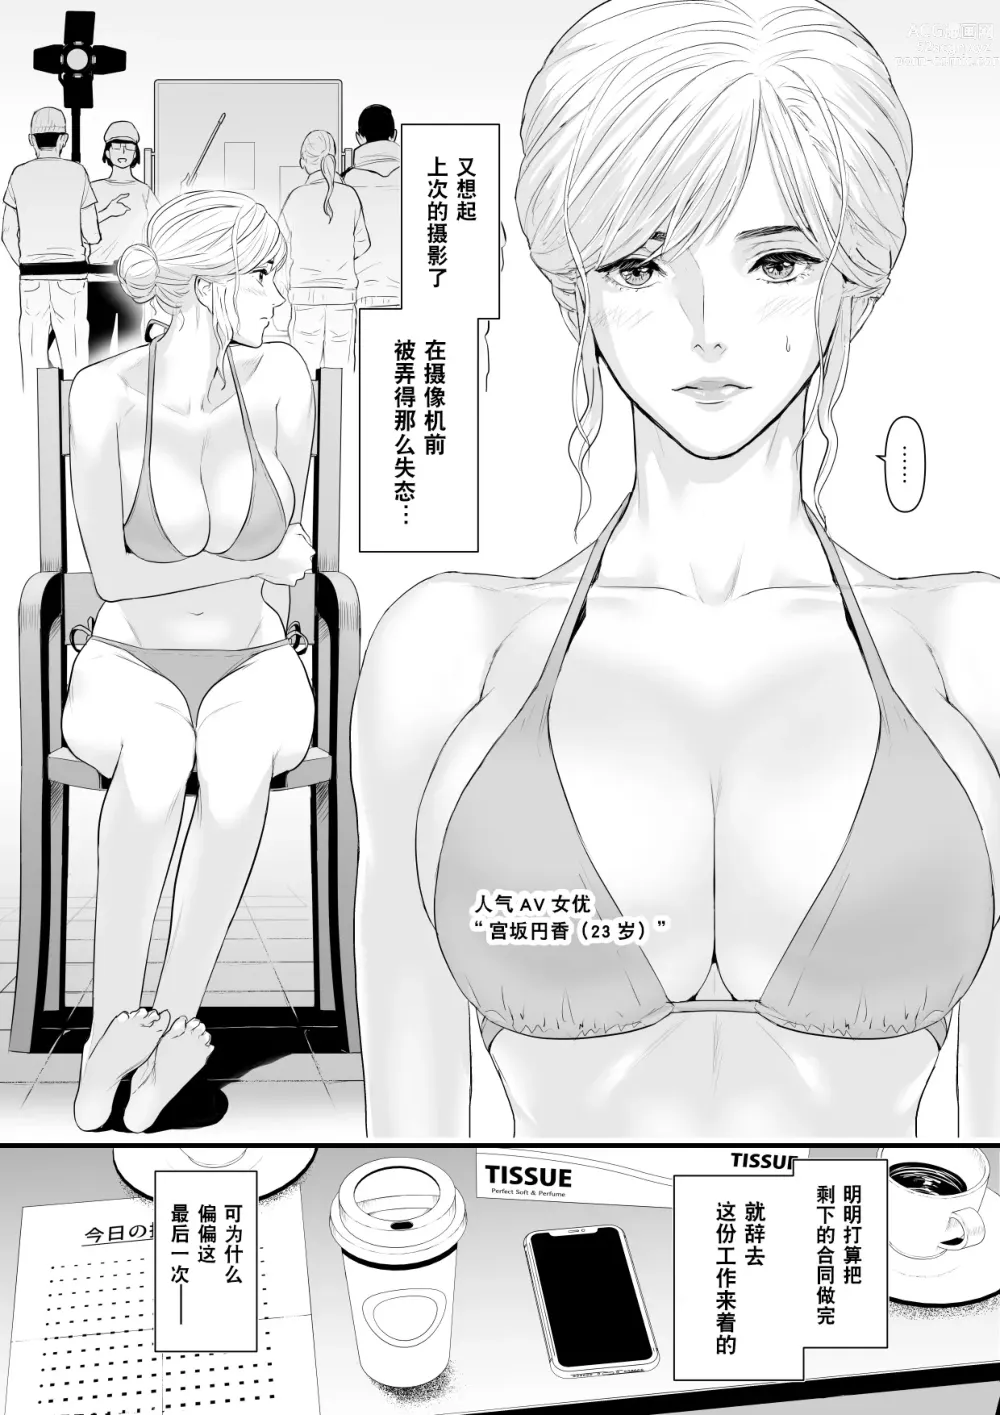 Page 3 of doujinshi 直到AV女优(23岁)撤回引退之前都将不断高潮2『时间停止道具篇』